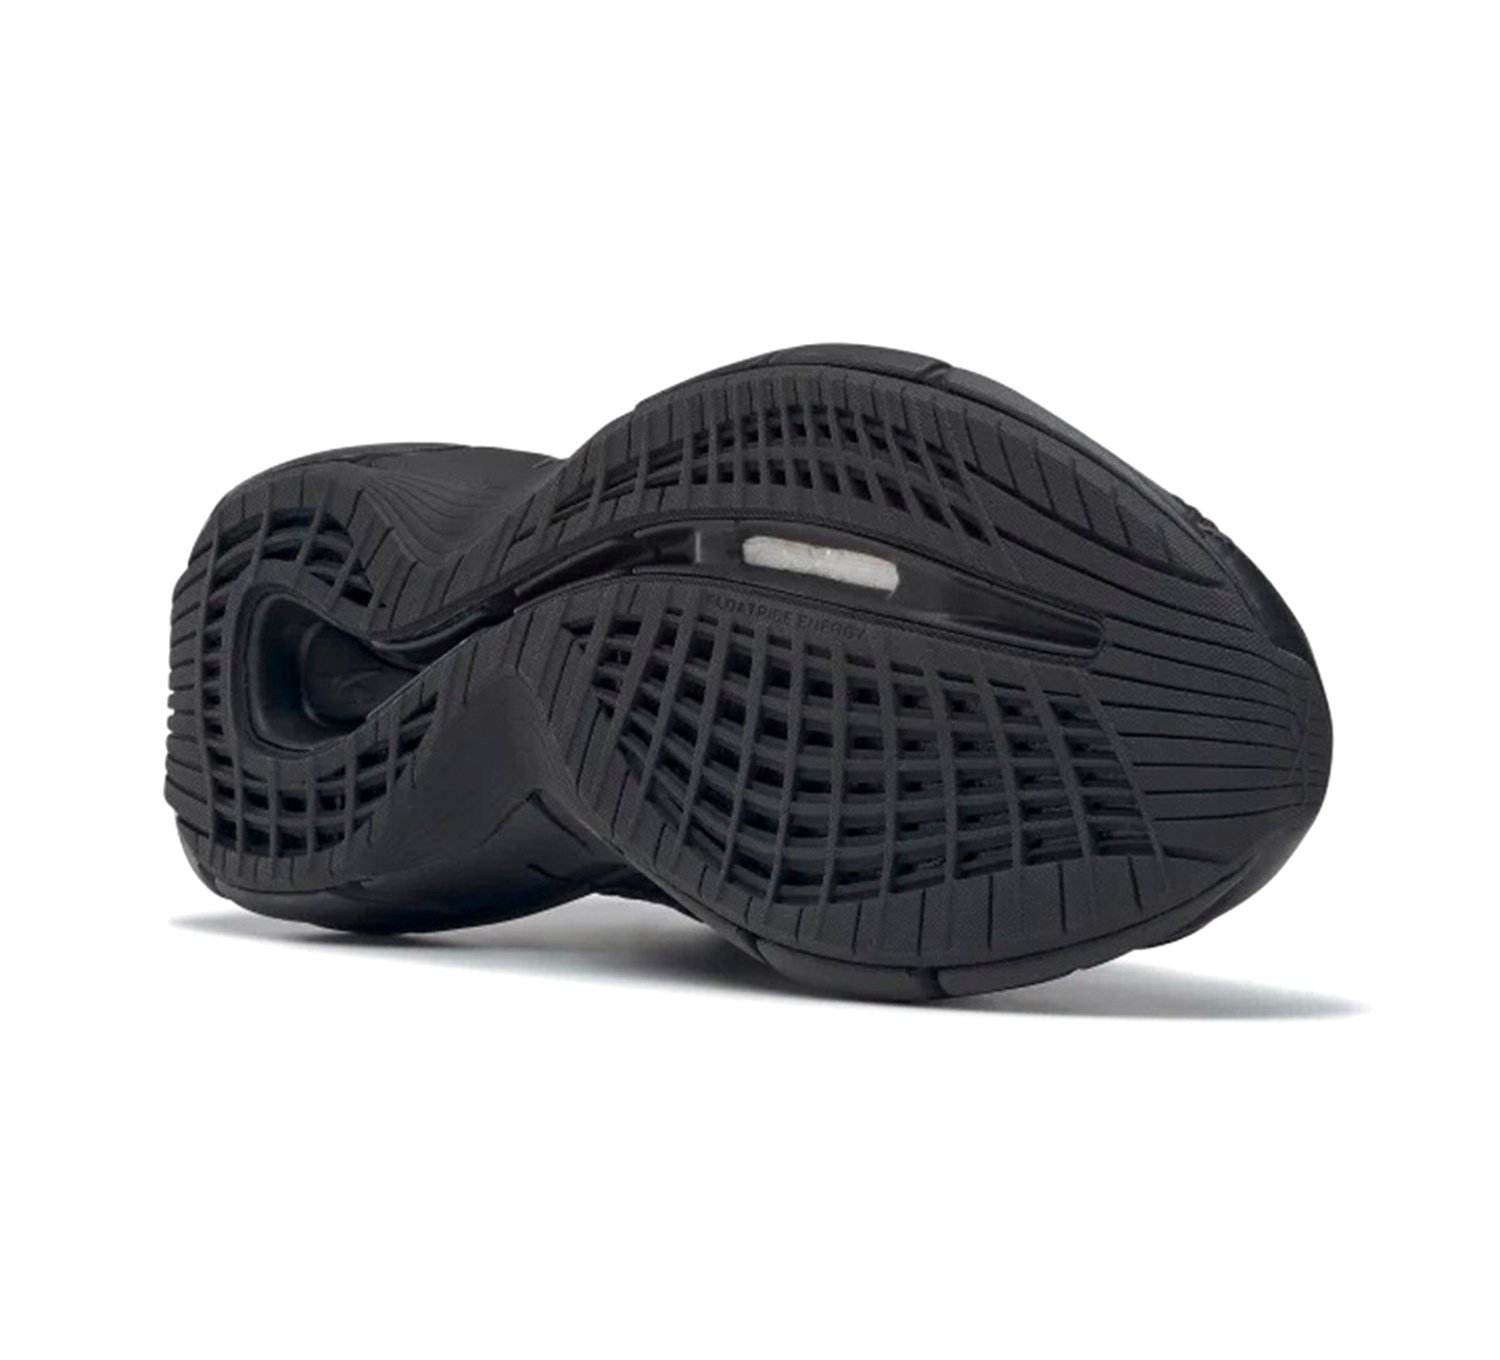 Reebok Zig Kinetica 2.5 Sneaker Erkek Ayakkabı GX0504